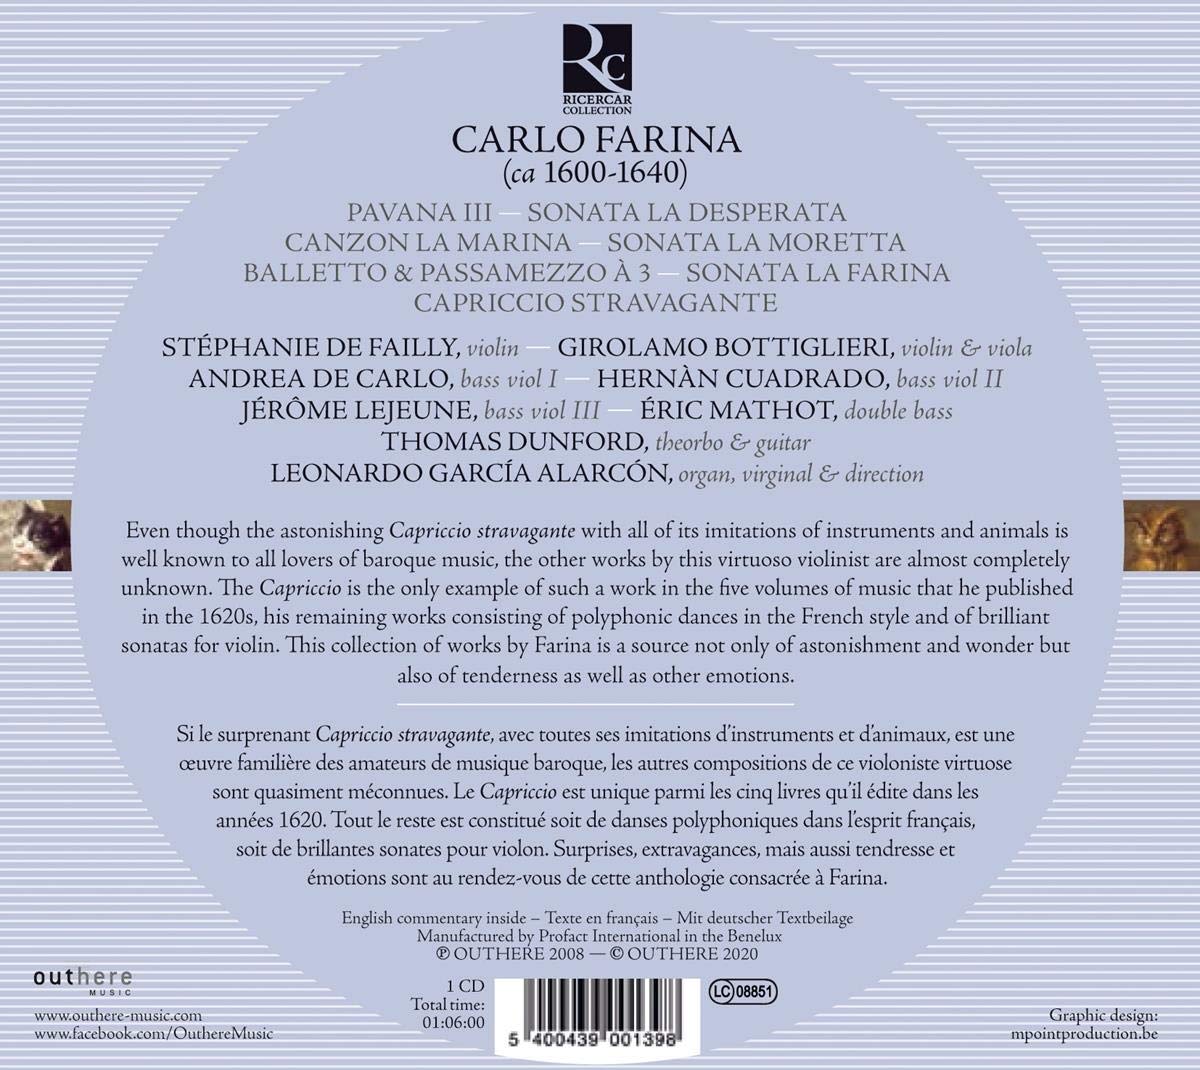 Clematis 카를로 파리나: 카프리치오 스트라바간테 (Carlo Farina: Capriccio Stravagante)